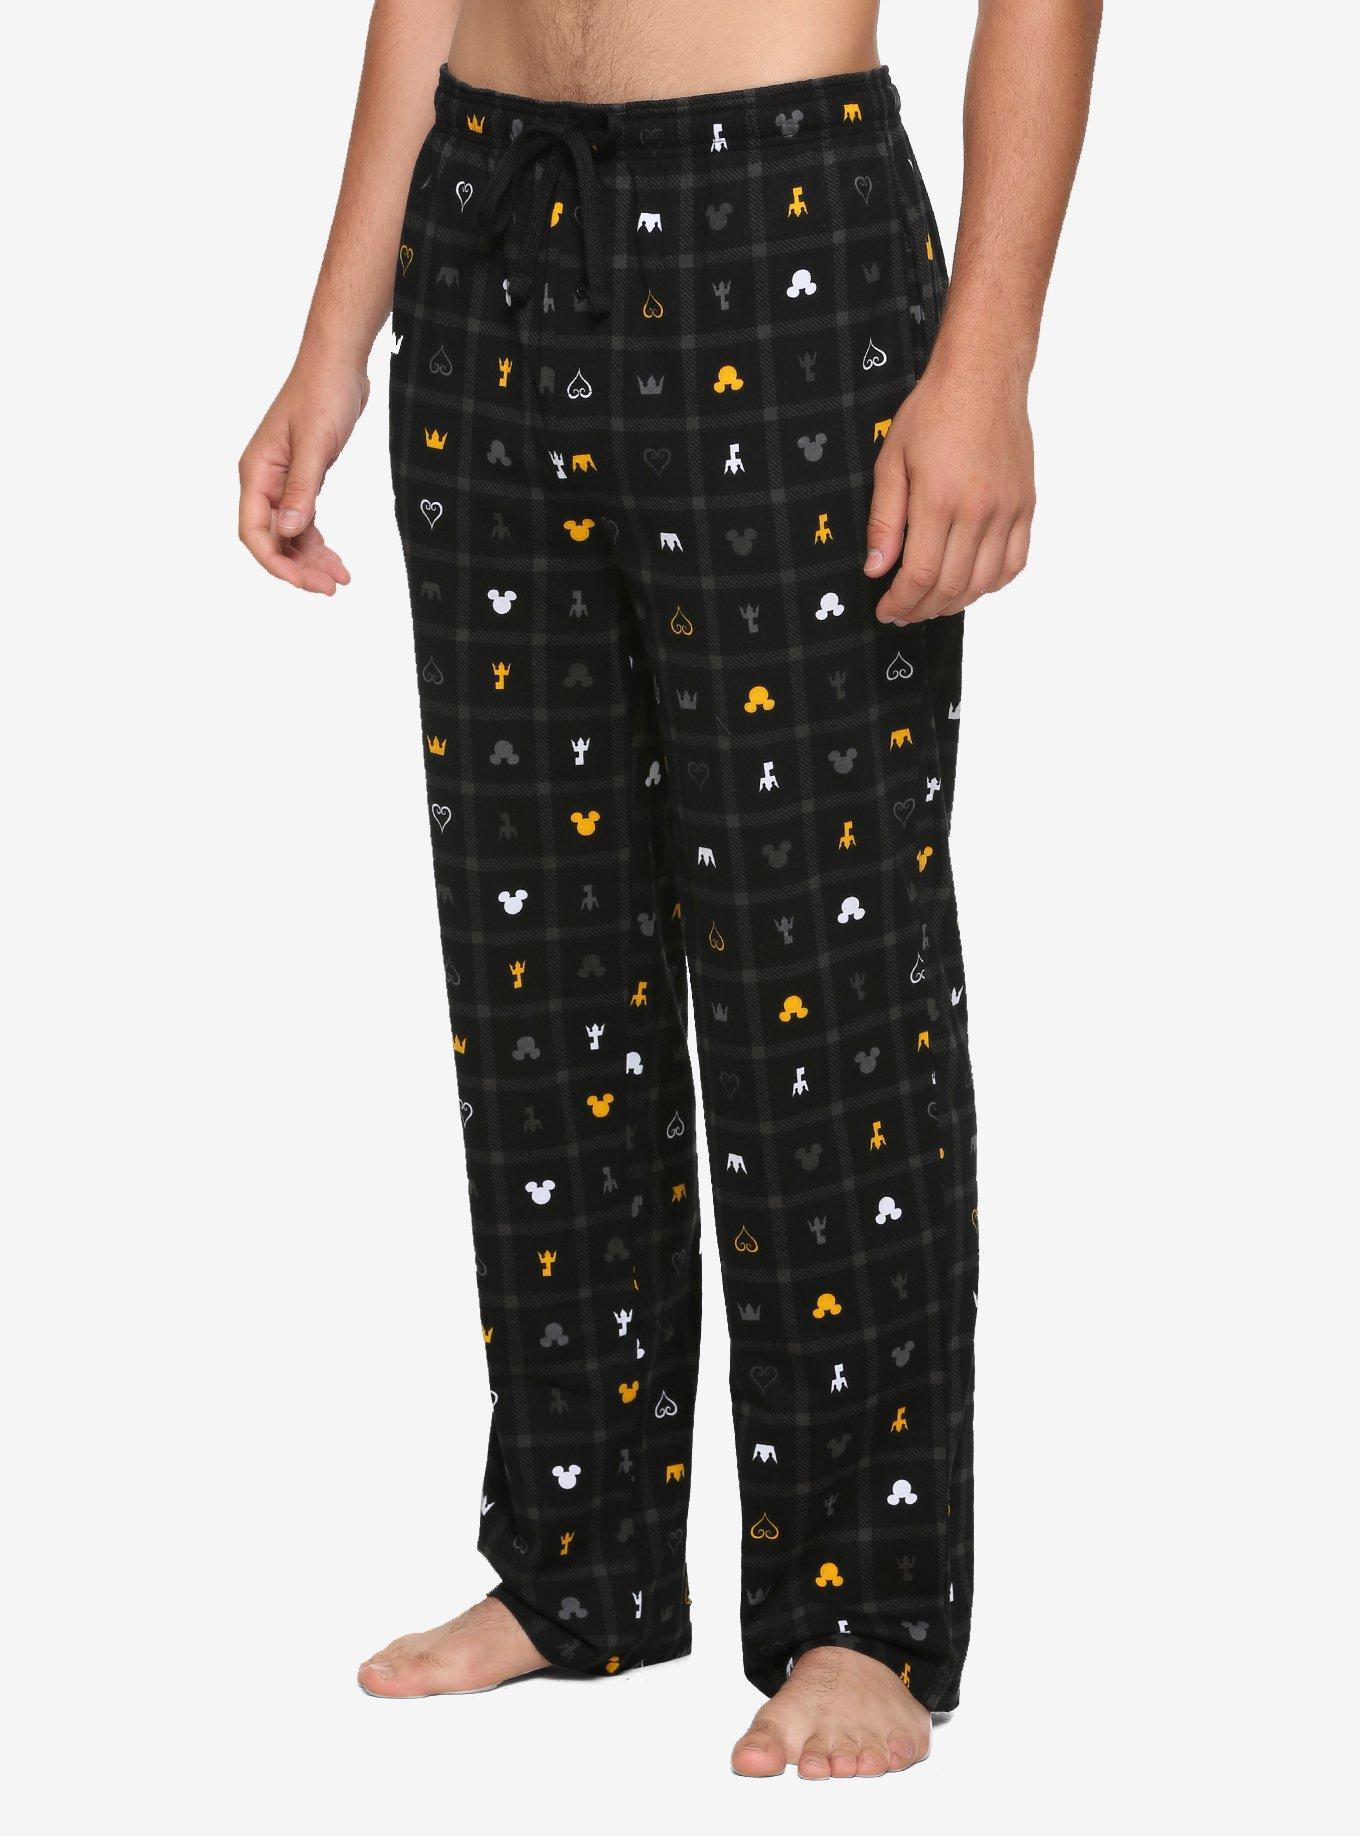 Disney Kingdom Hearts Icon Grid Pajama Pants